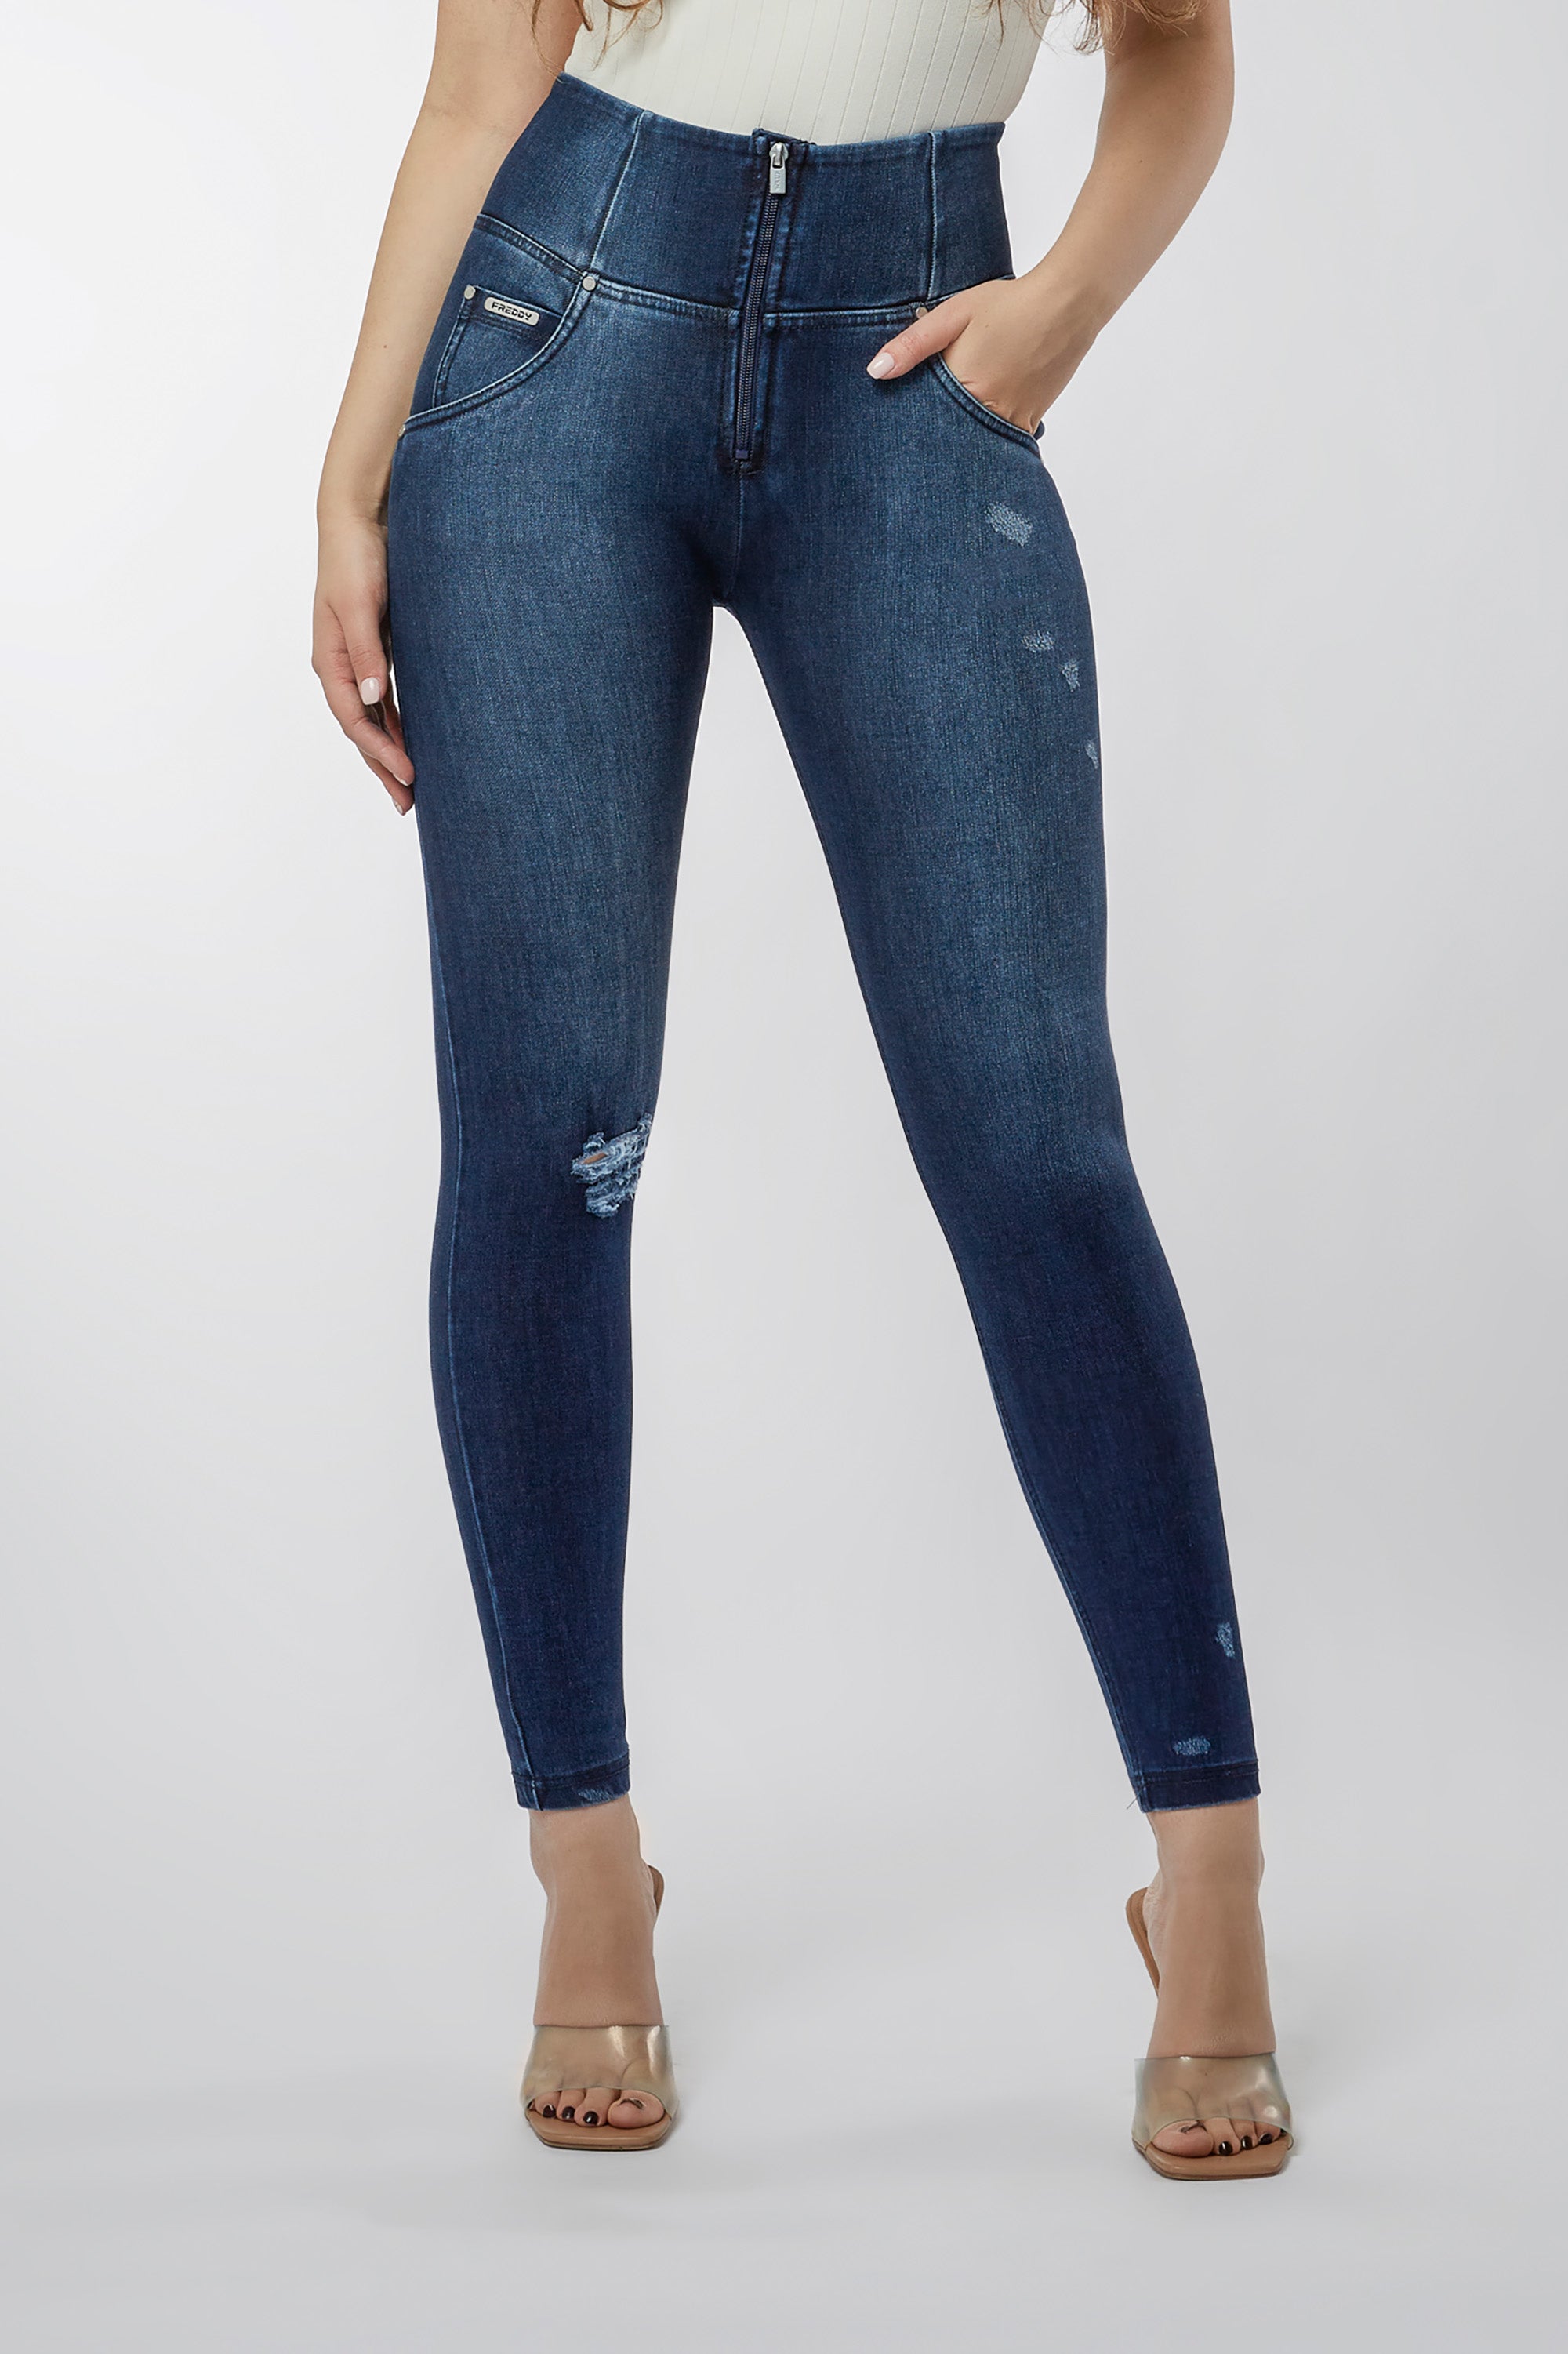 Buy RADIANCE Women's Regular Jeans (06200043_CL-JNS-RDC-94101-32